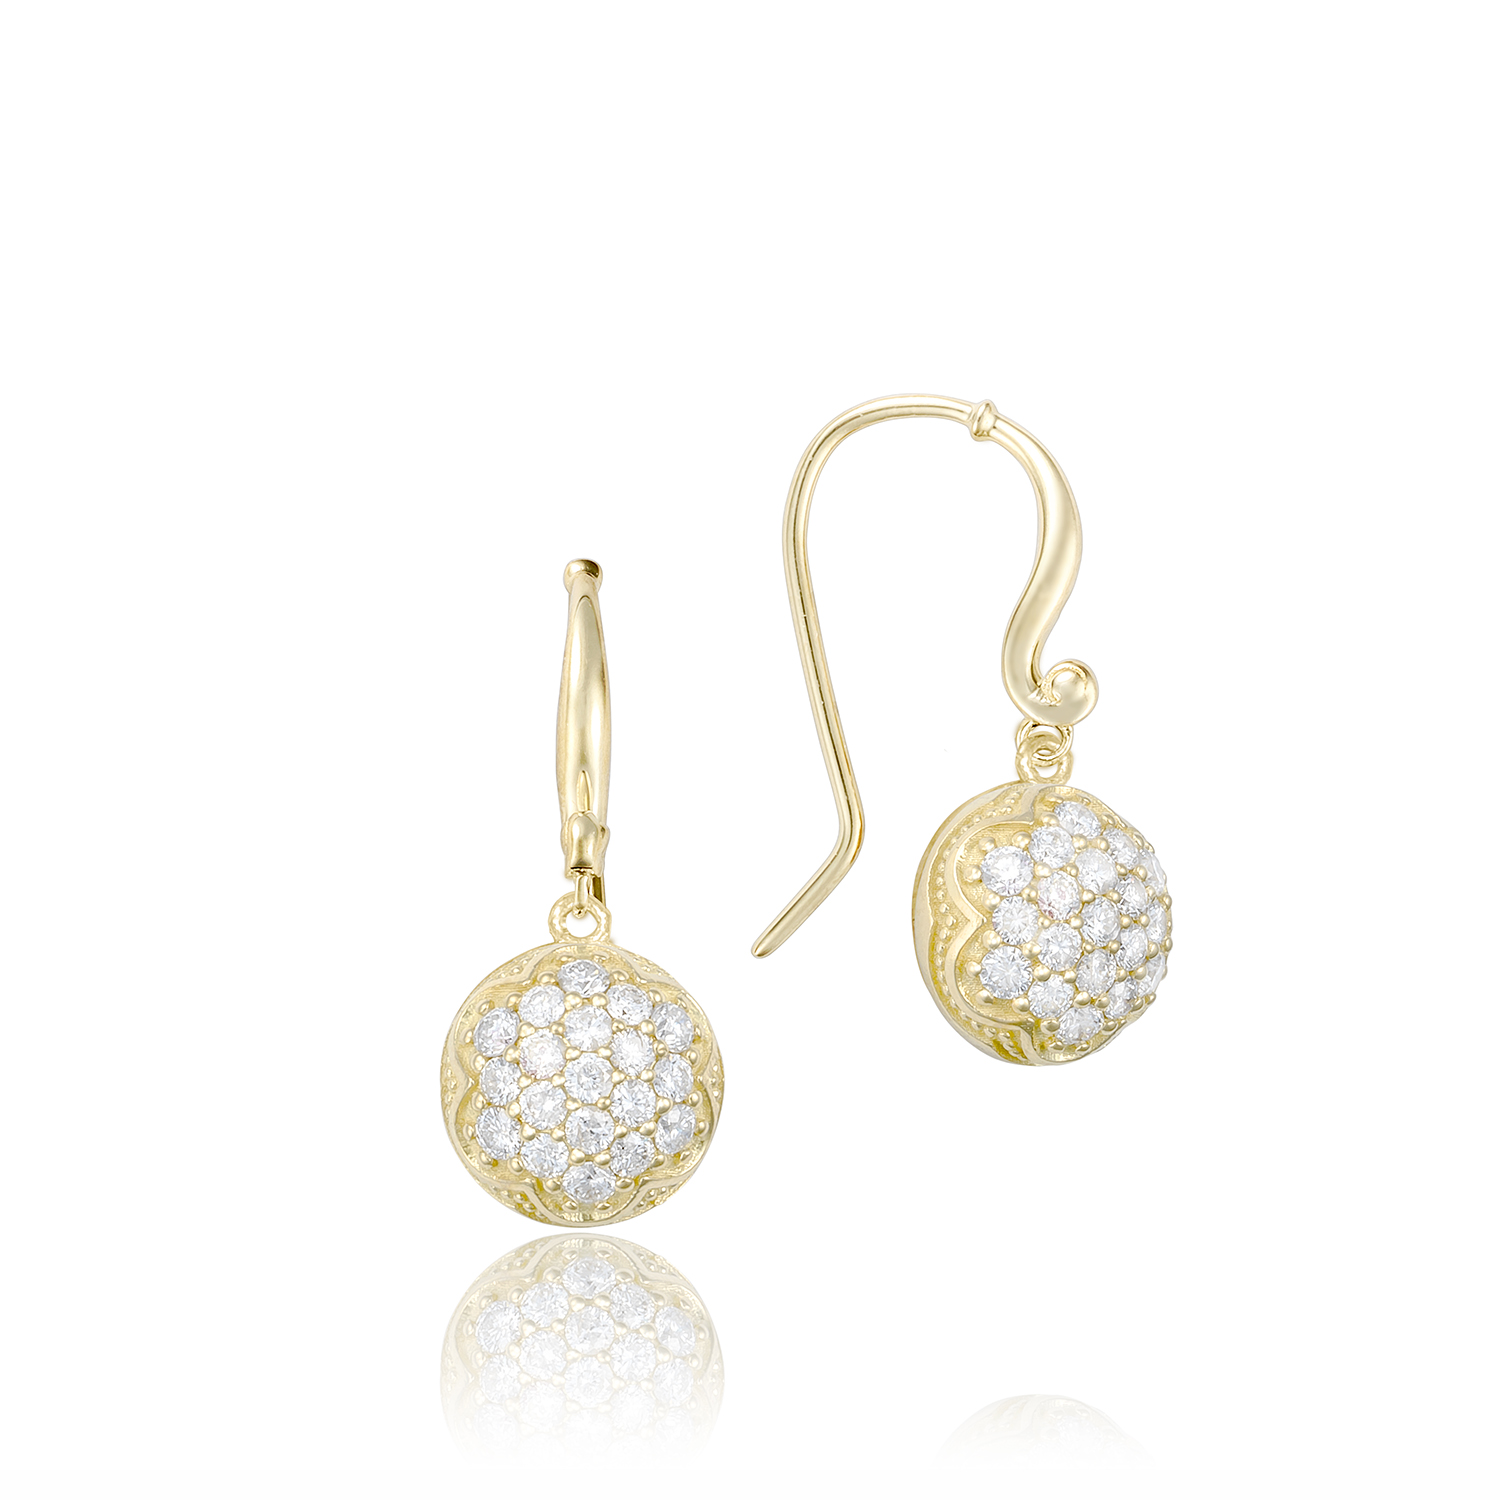 Tacori: 18 Karat Yellow Gold Engraved Drop Earrings With 0.80Tw Round Diamonds
Style Name: Sonoma Mist- Dew Drop